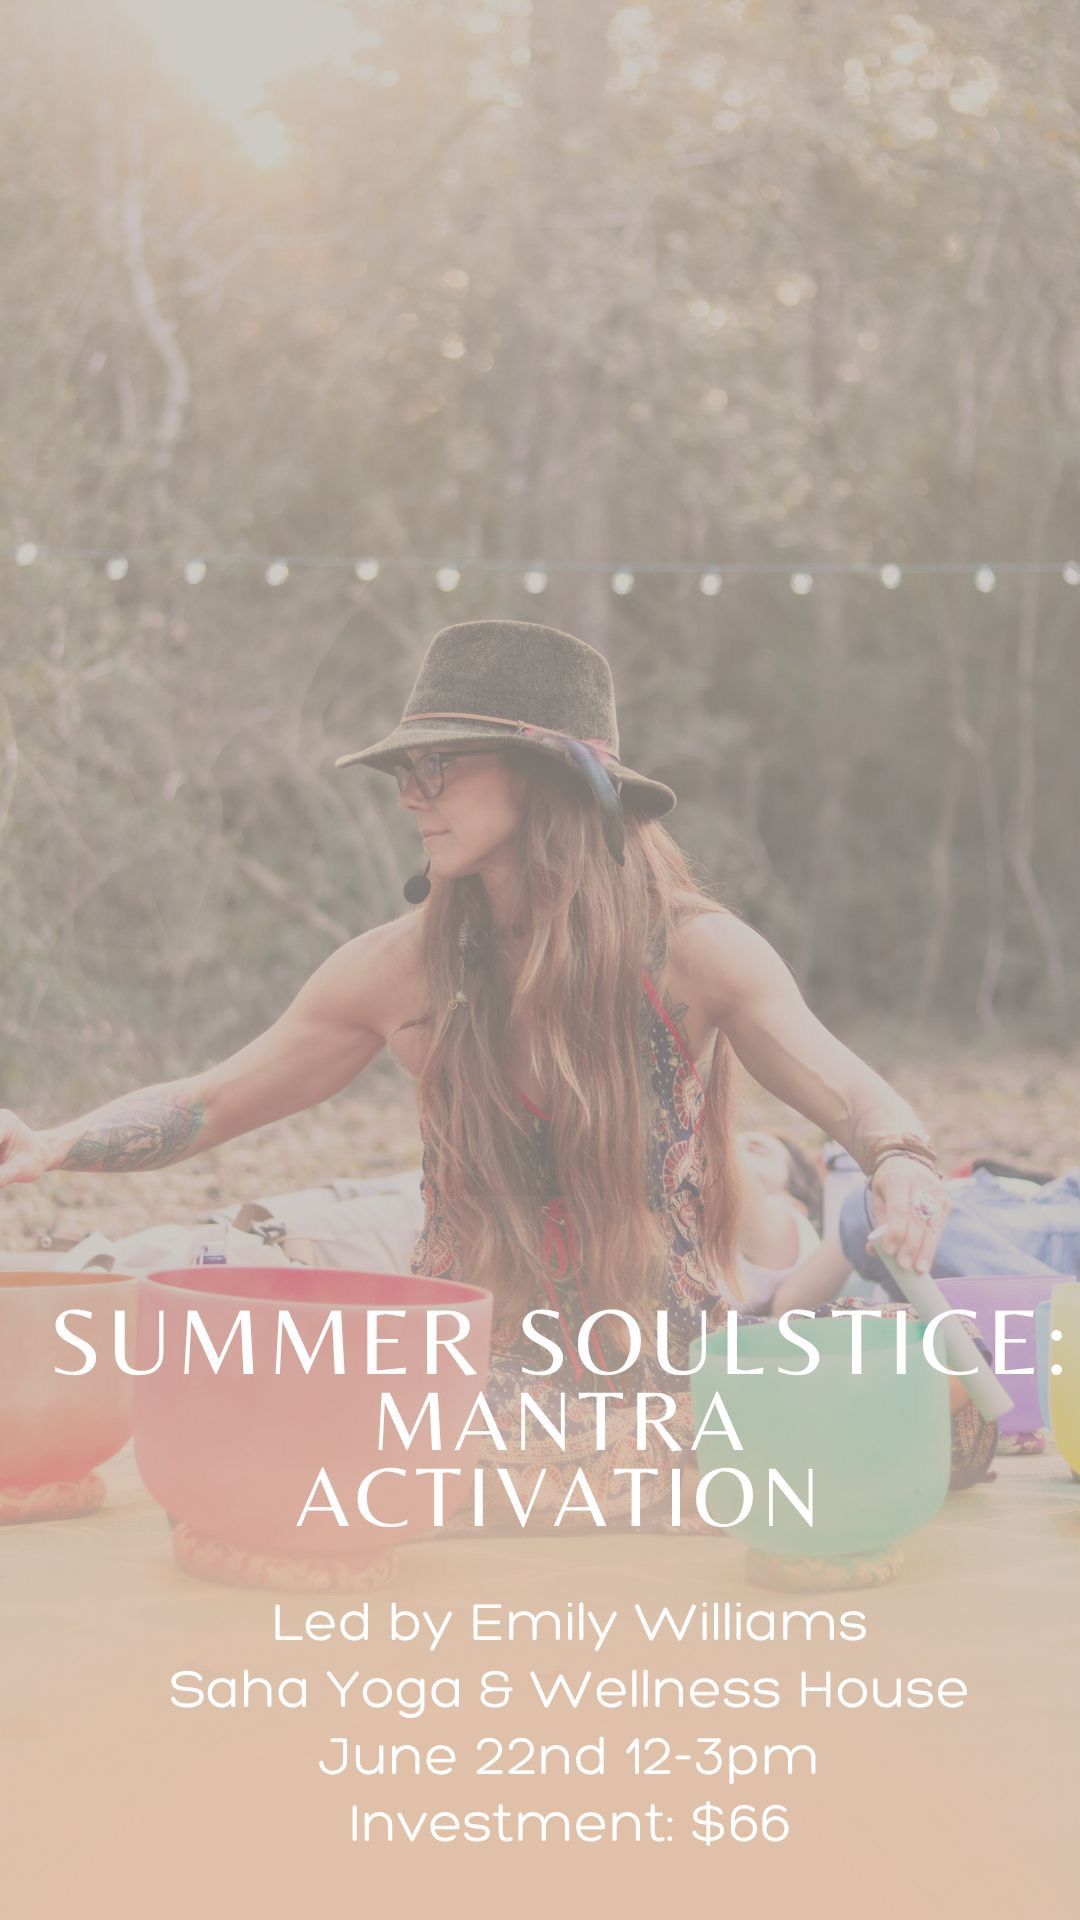 Summer Solstice Mantra Activation